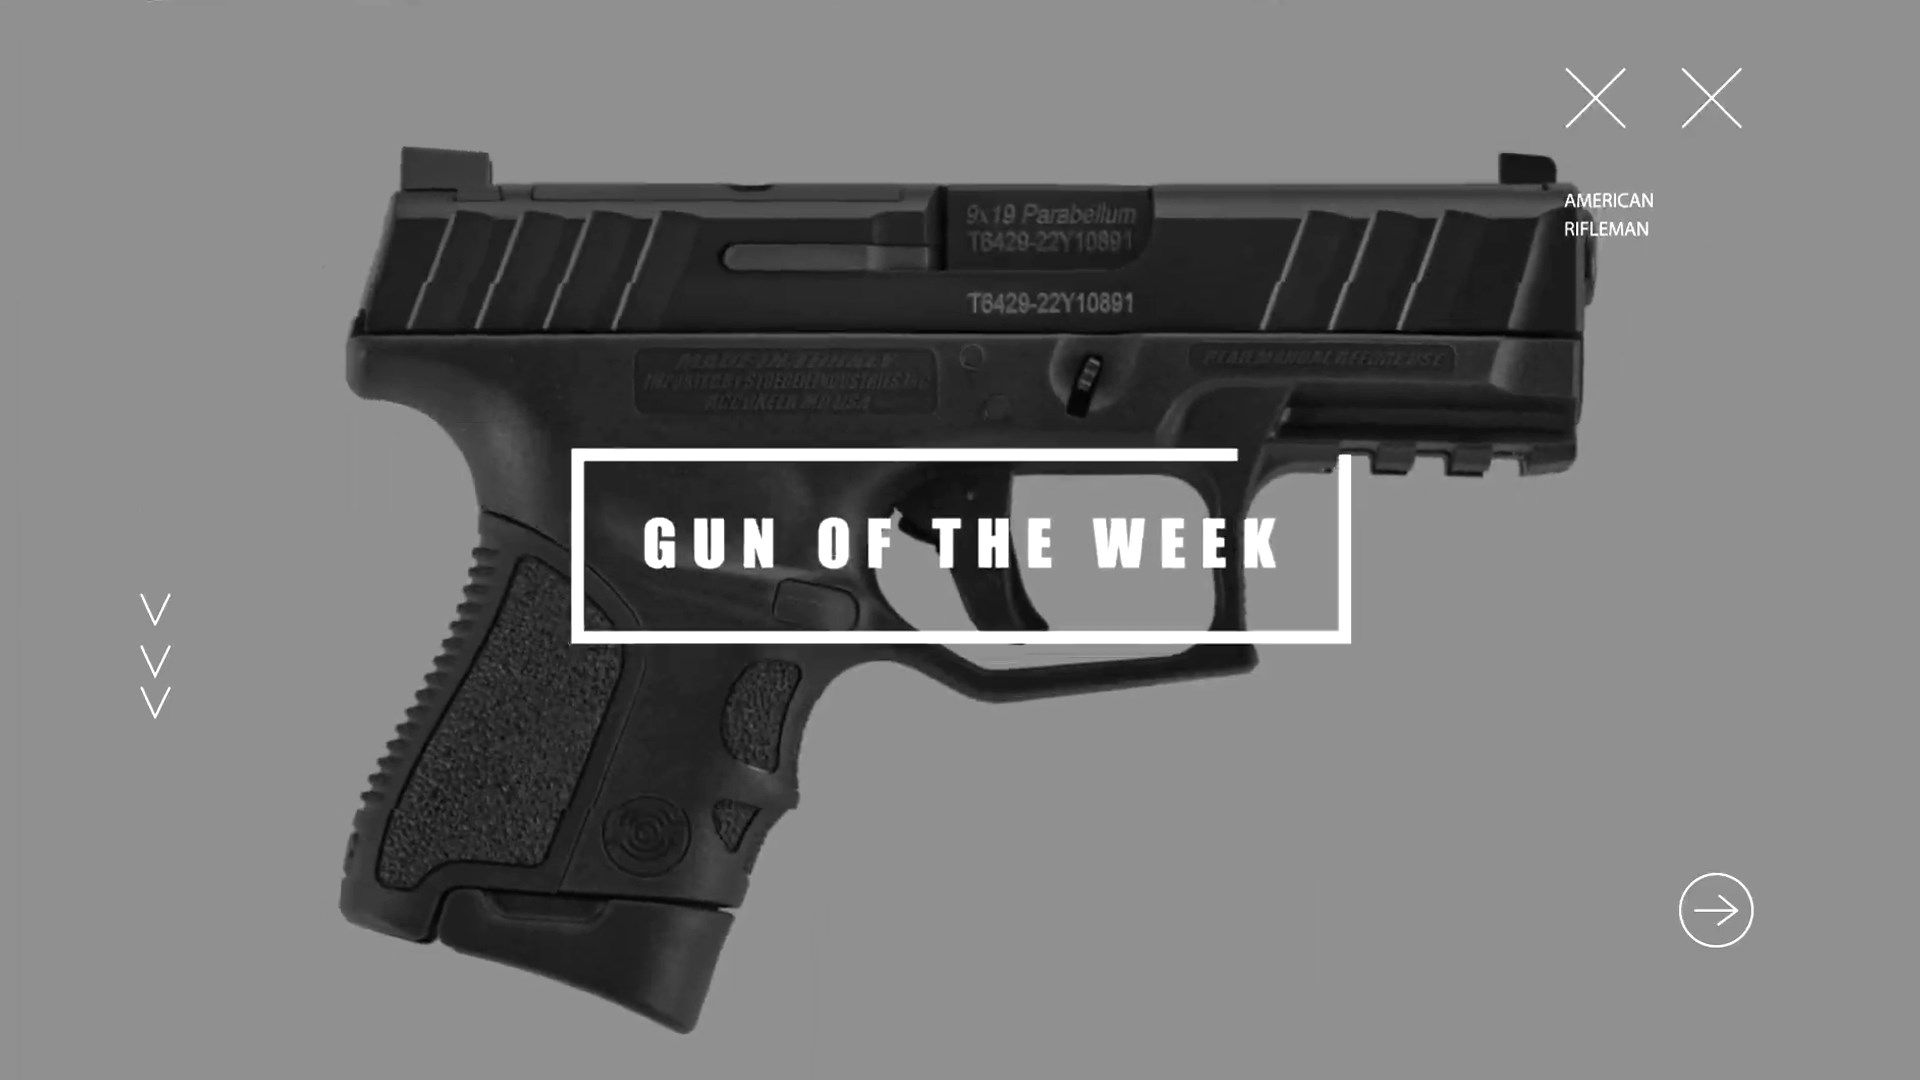 GUN OF THE WEEK AMERICAN RIFLEMAN XX arrows text box overlay right-side view Stoeger STR-9SC pistol 9 mm black gun